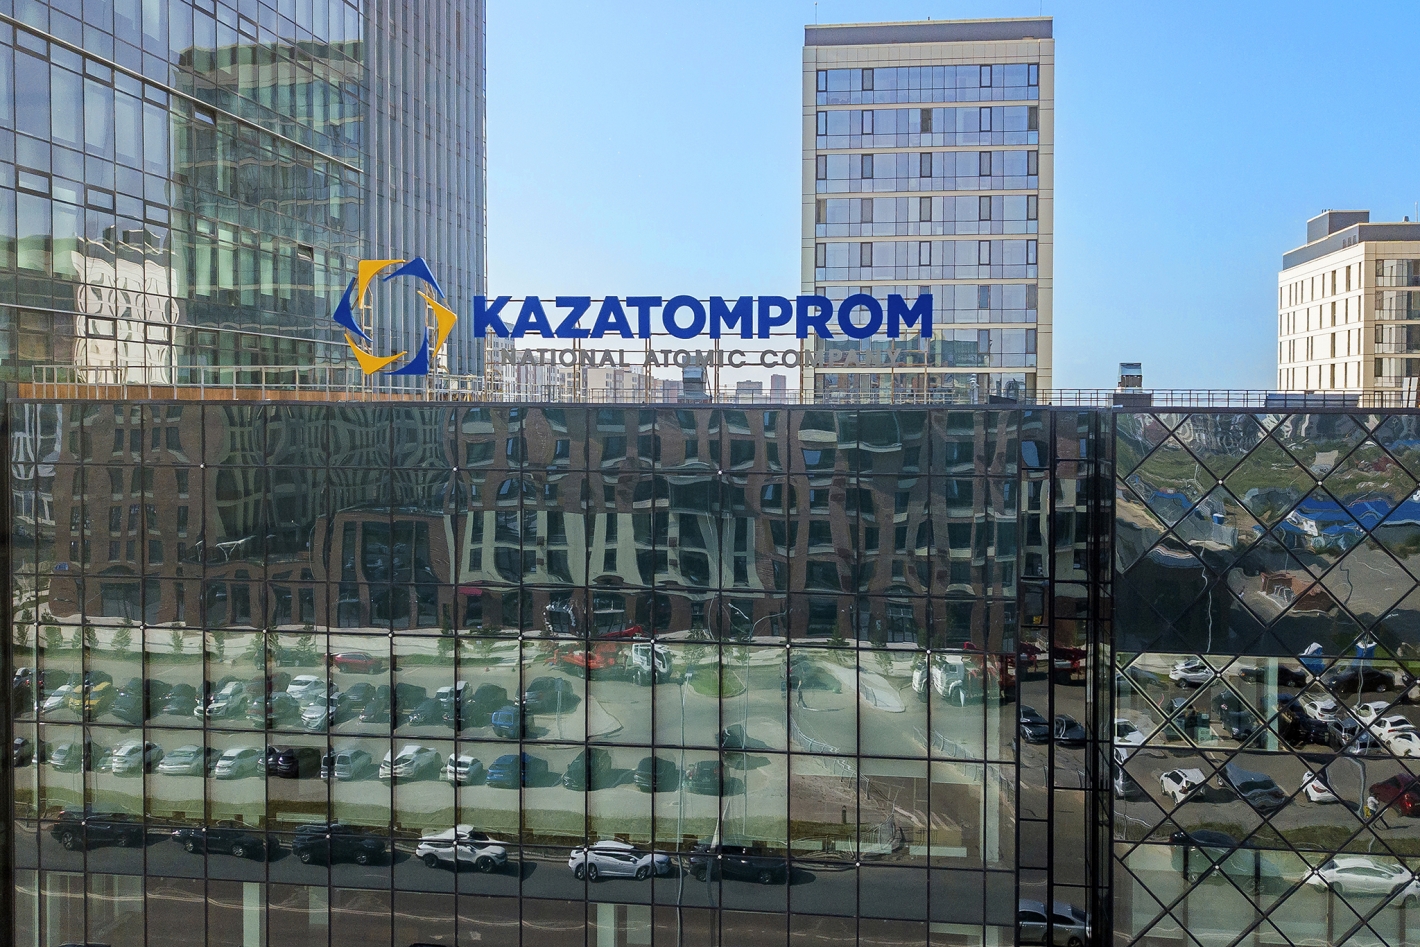 Kazatomprom 2Q23 Operations and Trading Update